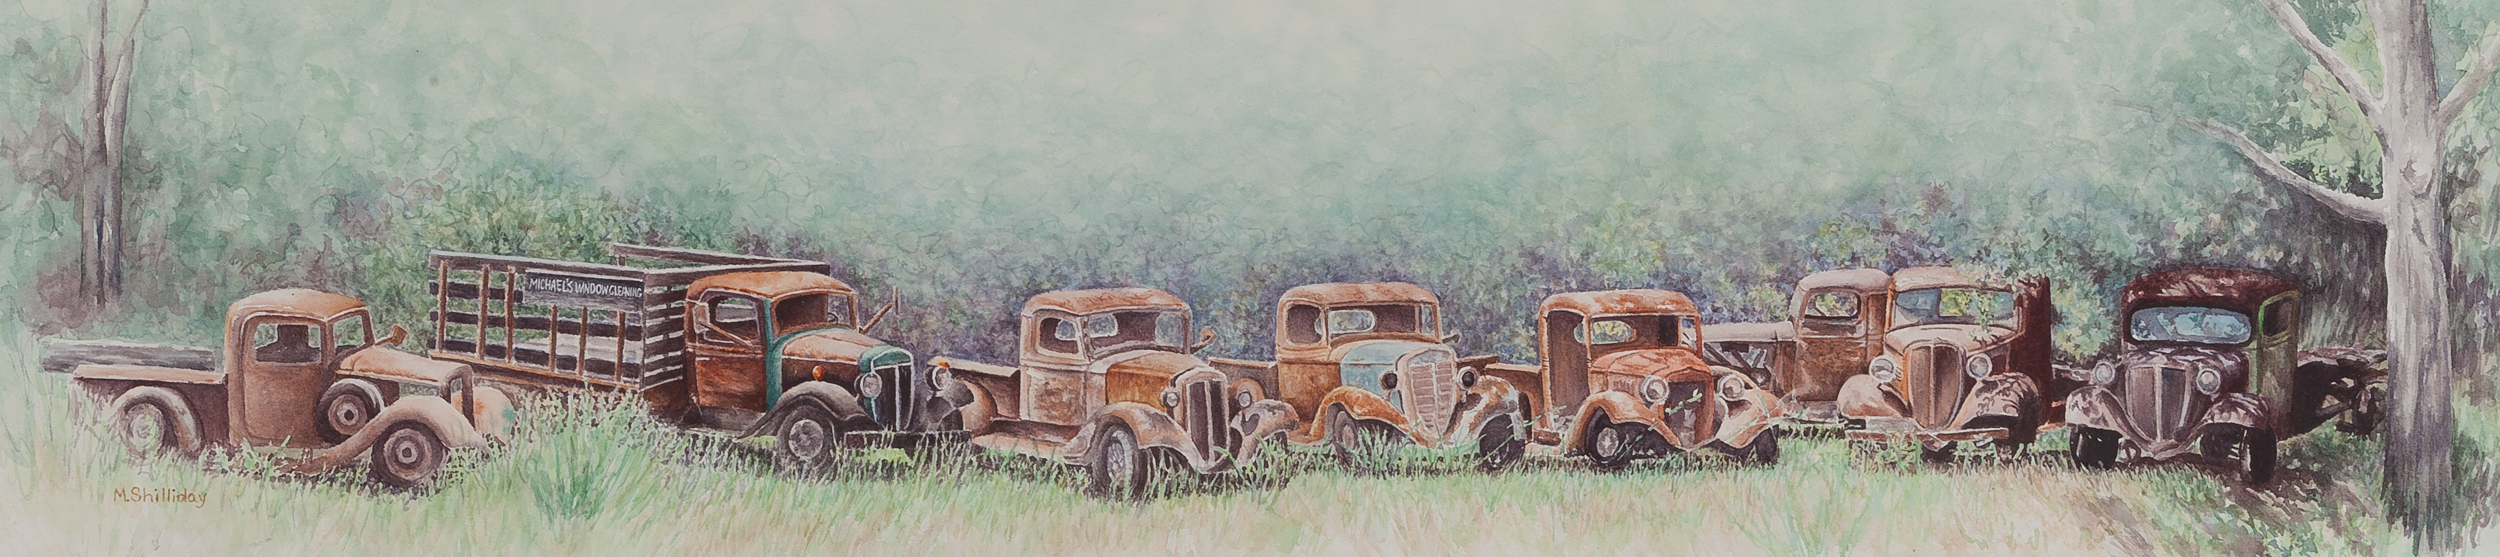 A grouping of 1933 - 1938 International Harvester trucks in Atascadero, CA